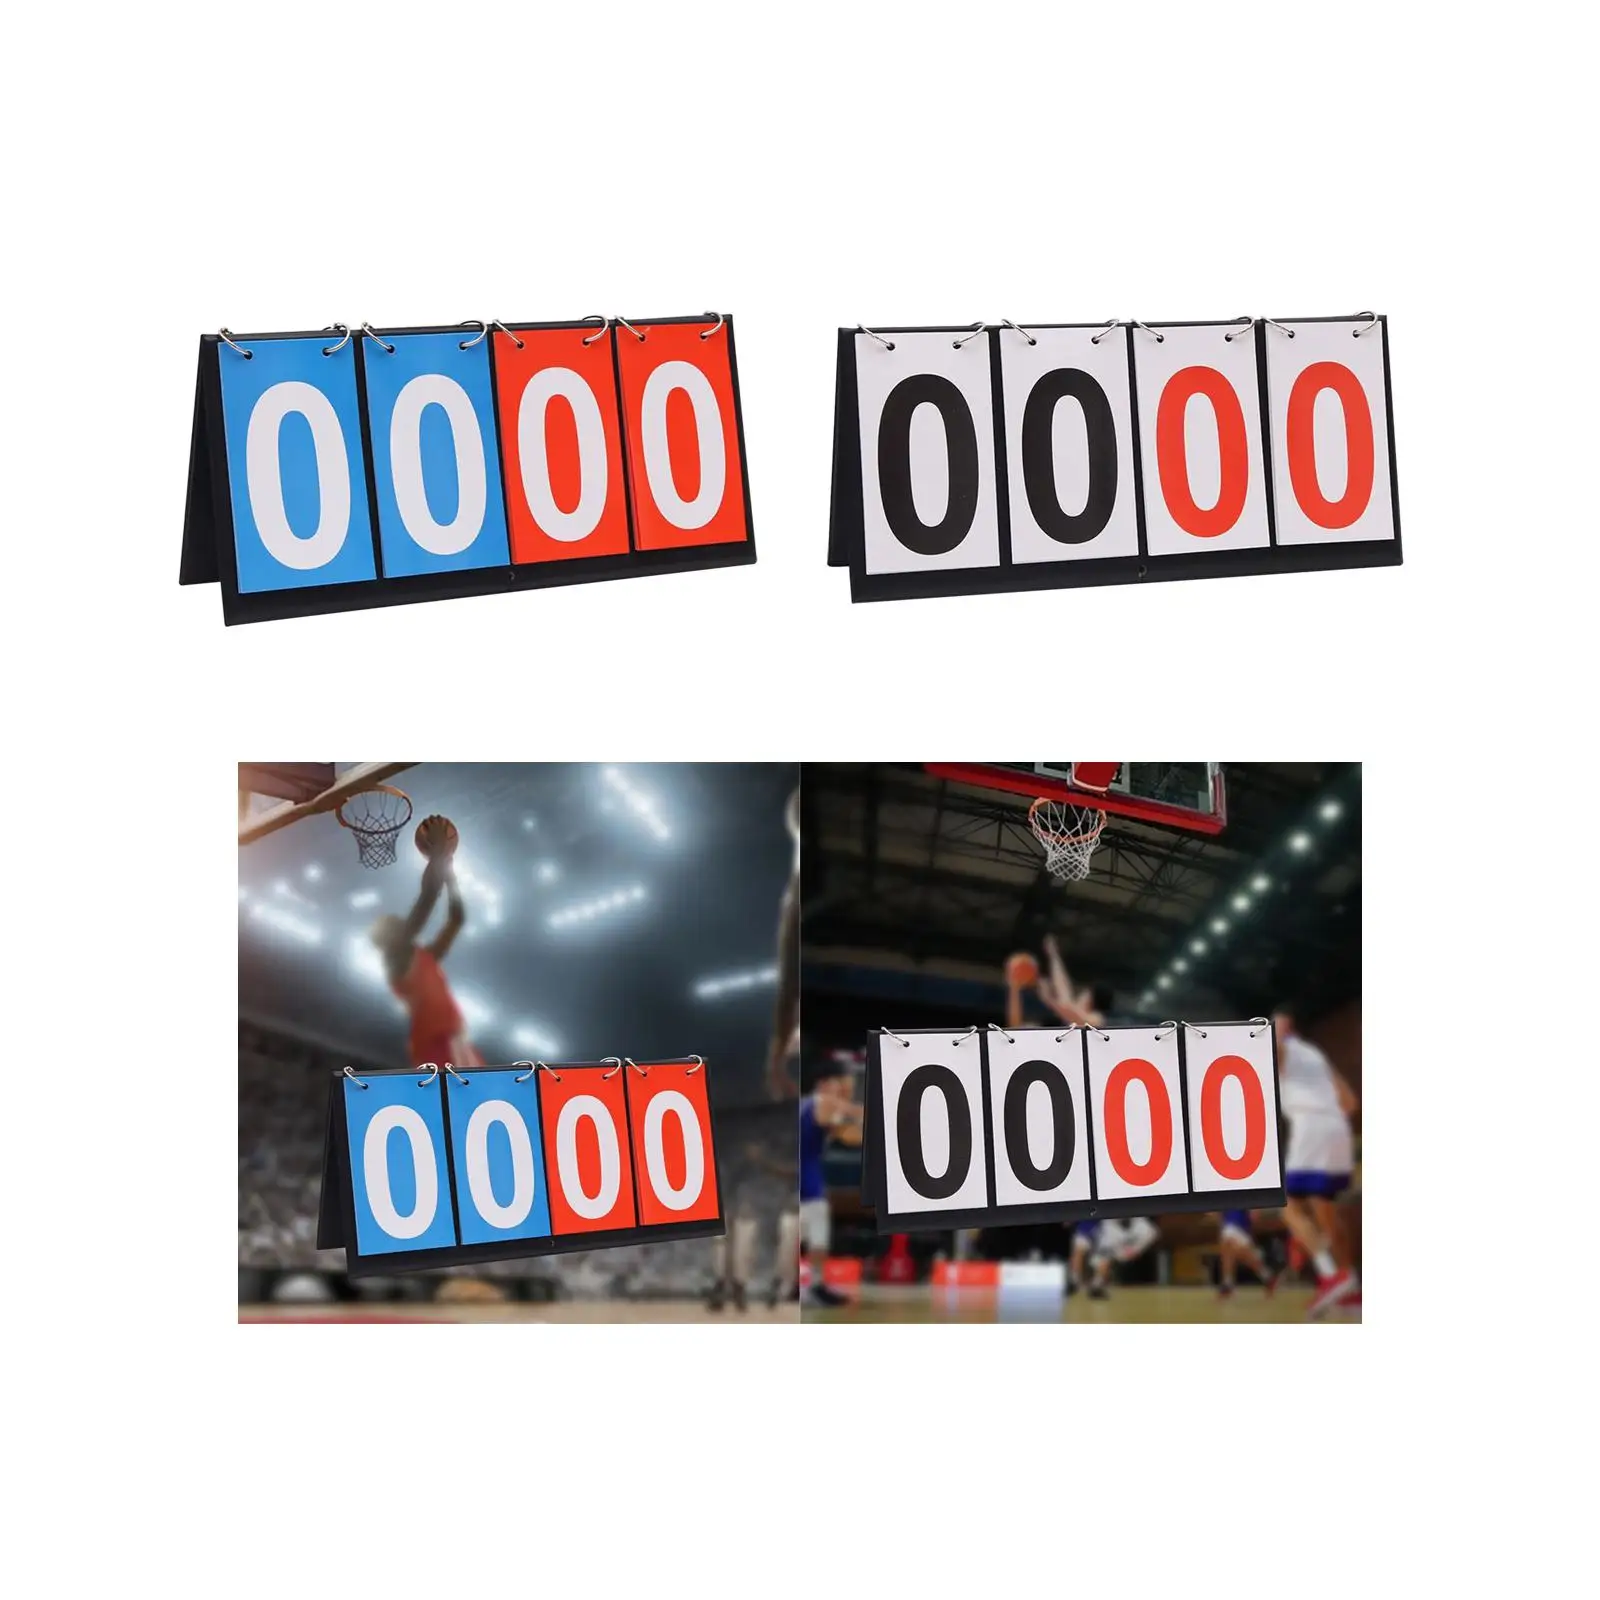 Tabletop Scoreboard Desktop Score Counter Scorekeeper Score Keeper for Outdoor Sports Team Games Volleyball Pingpong Ball Tennis